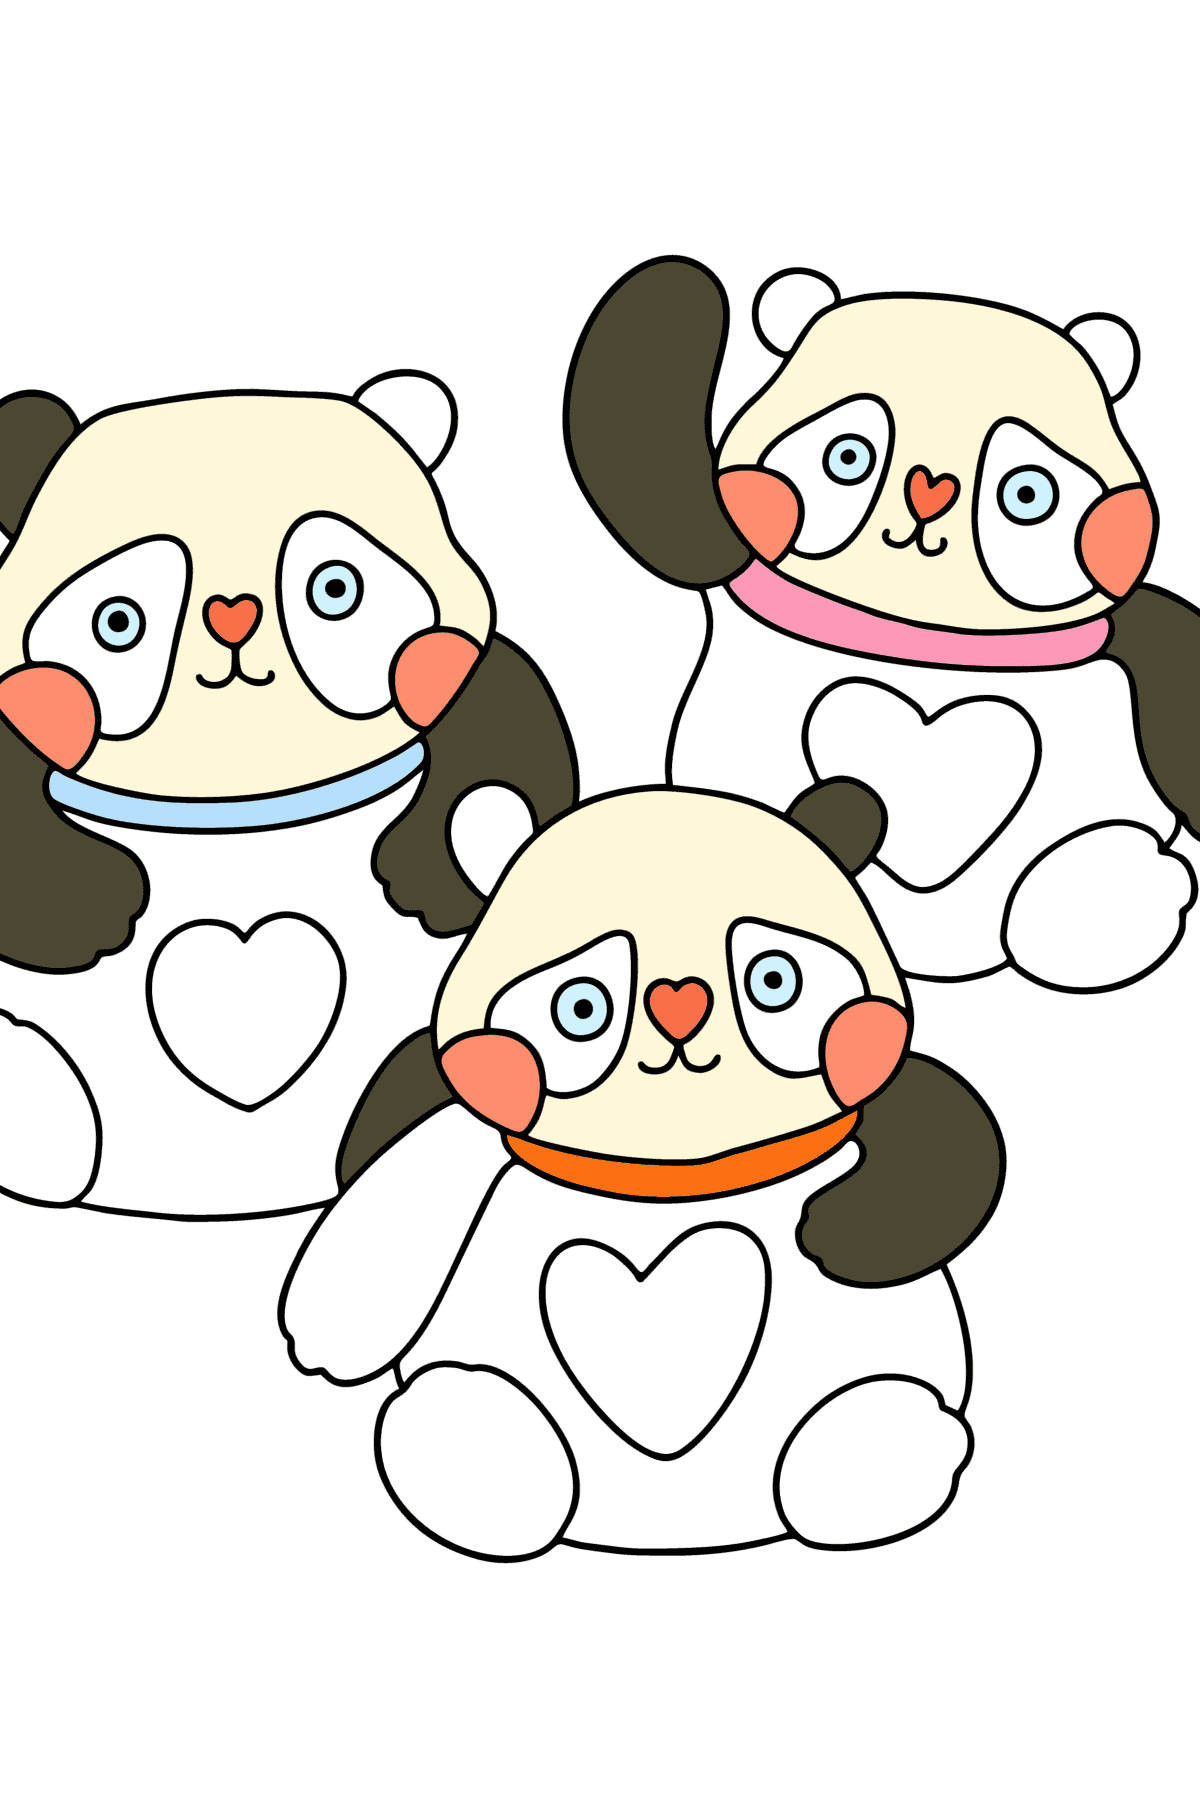 Dibujo de pandas kawaii para colorear - Dibujos para Colorear para Niños